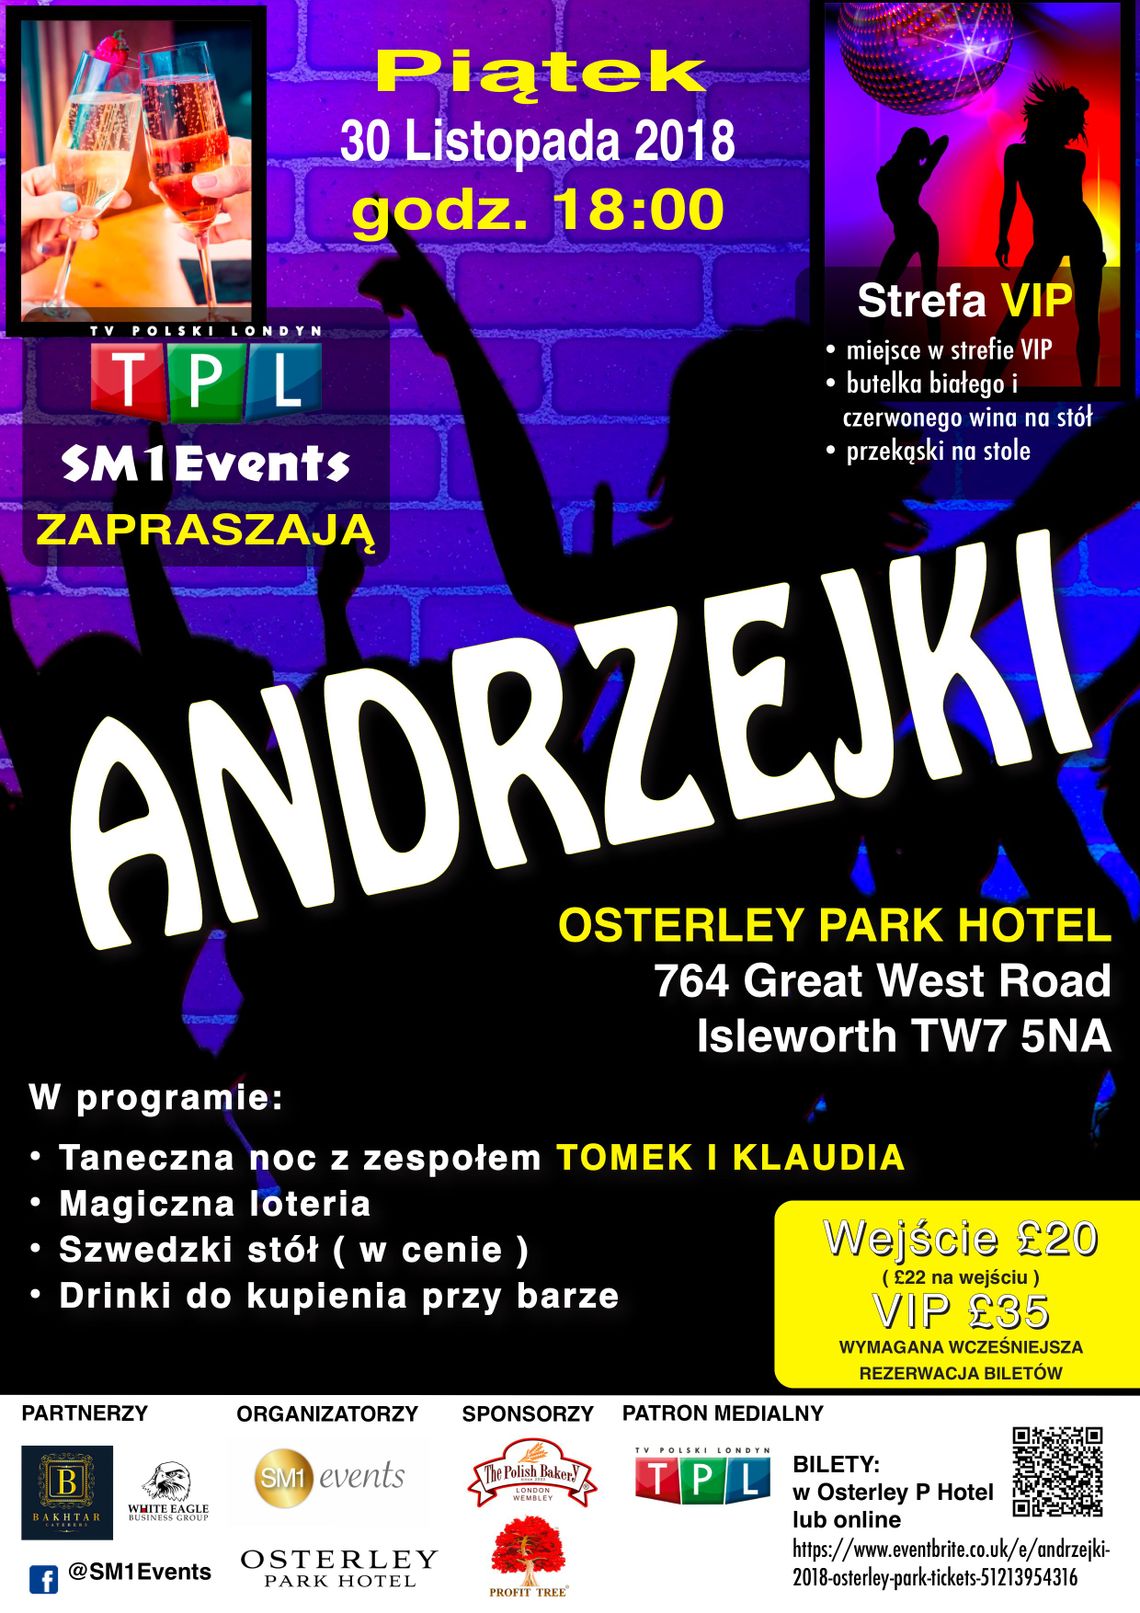 Andrzejki 2018 - Osterley Park